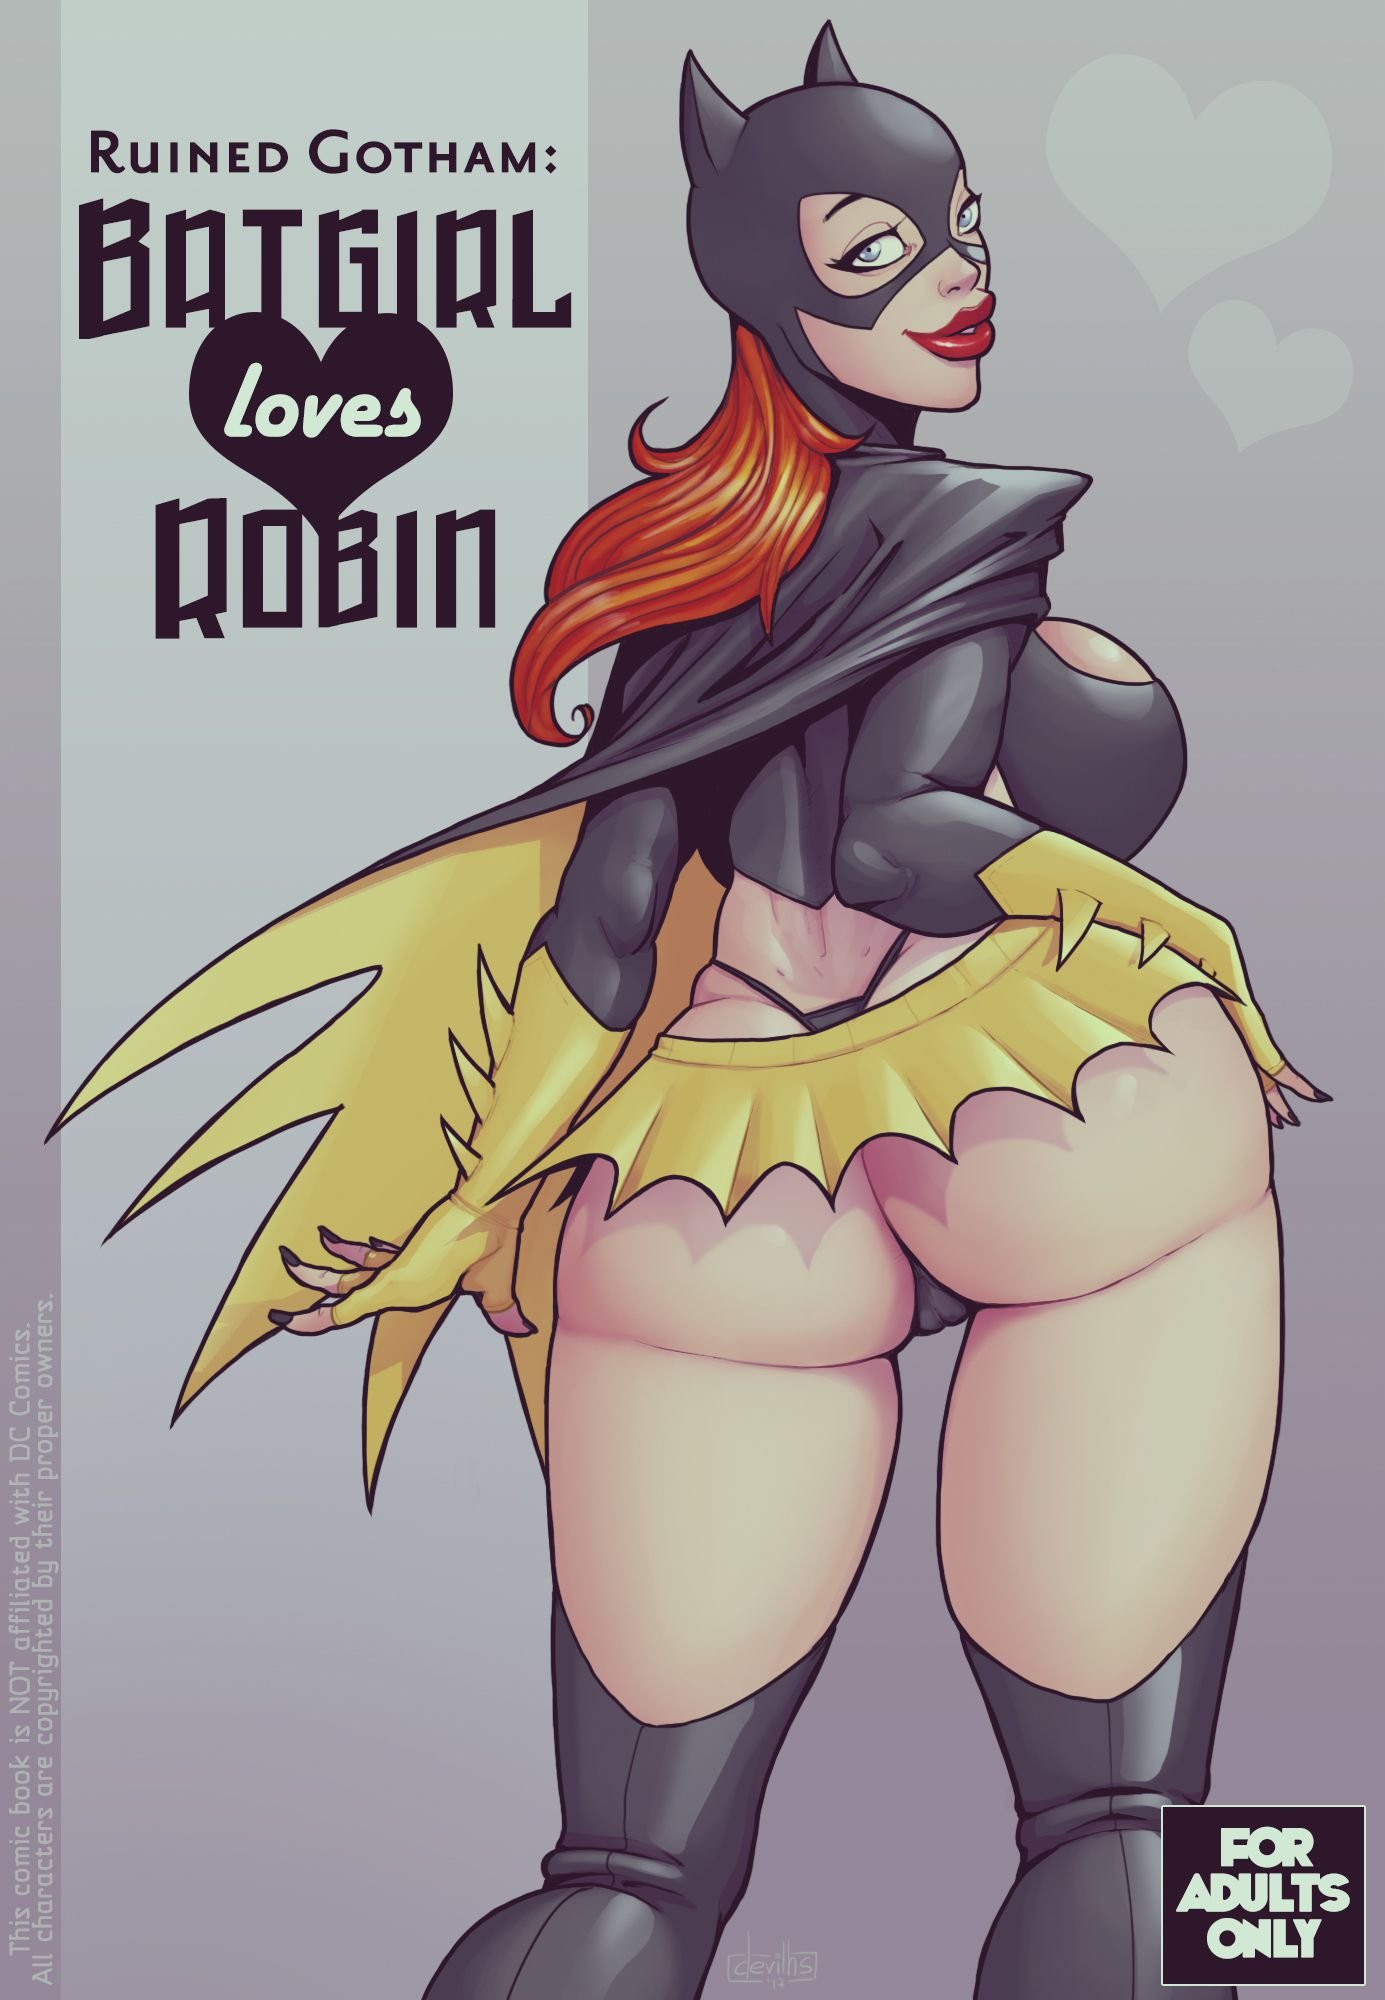 Batgirl Hot Lesbian Hentai - Ruined Gotham - Batgirl Loves Robin (Batman) [DevilHS] Porn Comic -  AllPornComic